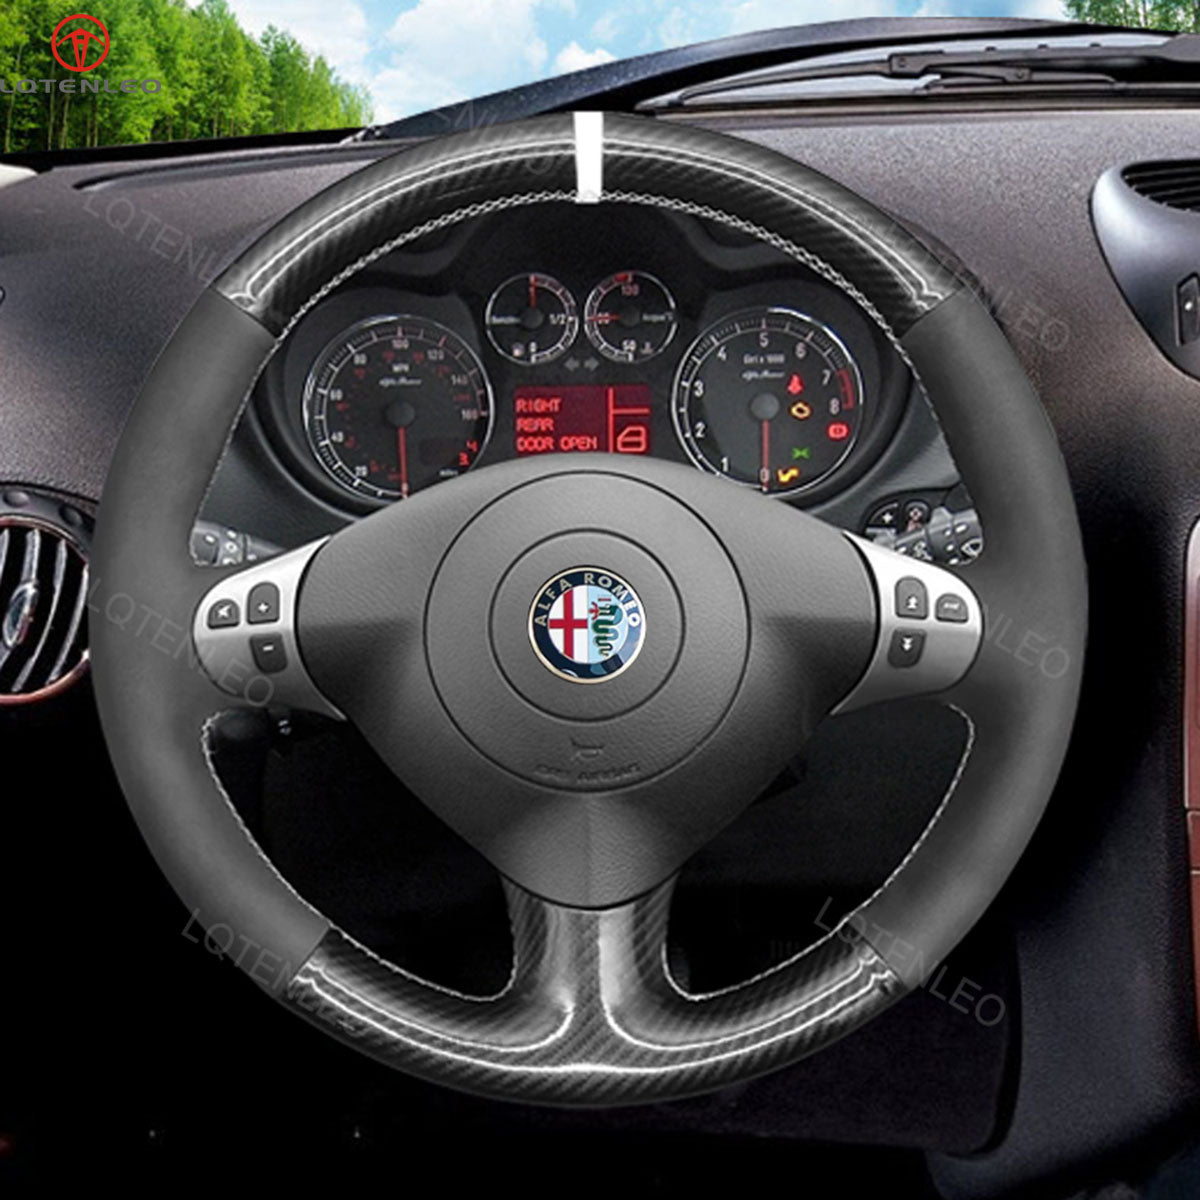 LQTENLEO Hand Stitch Car Steering Wheel Cover for Alfa Romeo 147 2000-2010 / 156 2003-2007 / Crosswagon 2004-2005 - LQTENLEO Official Store